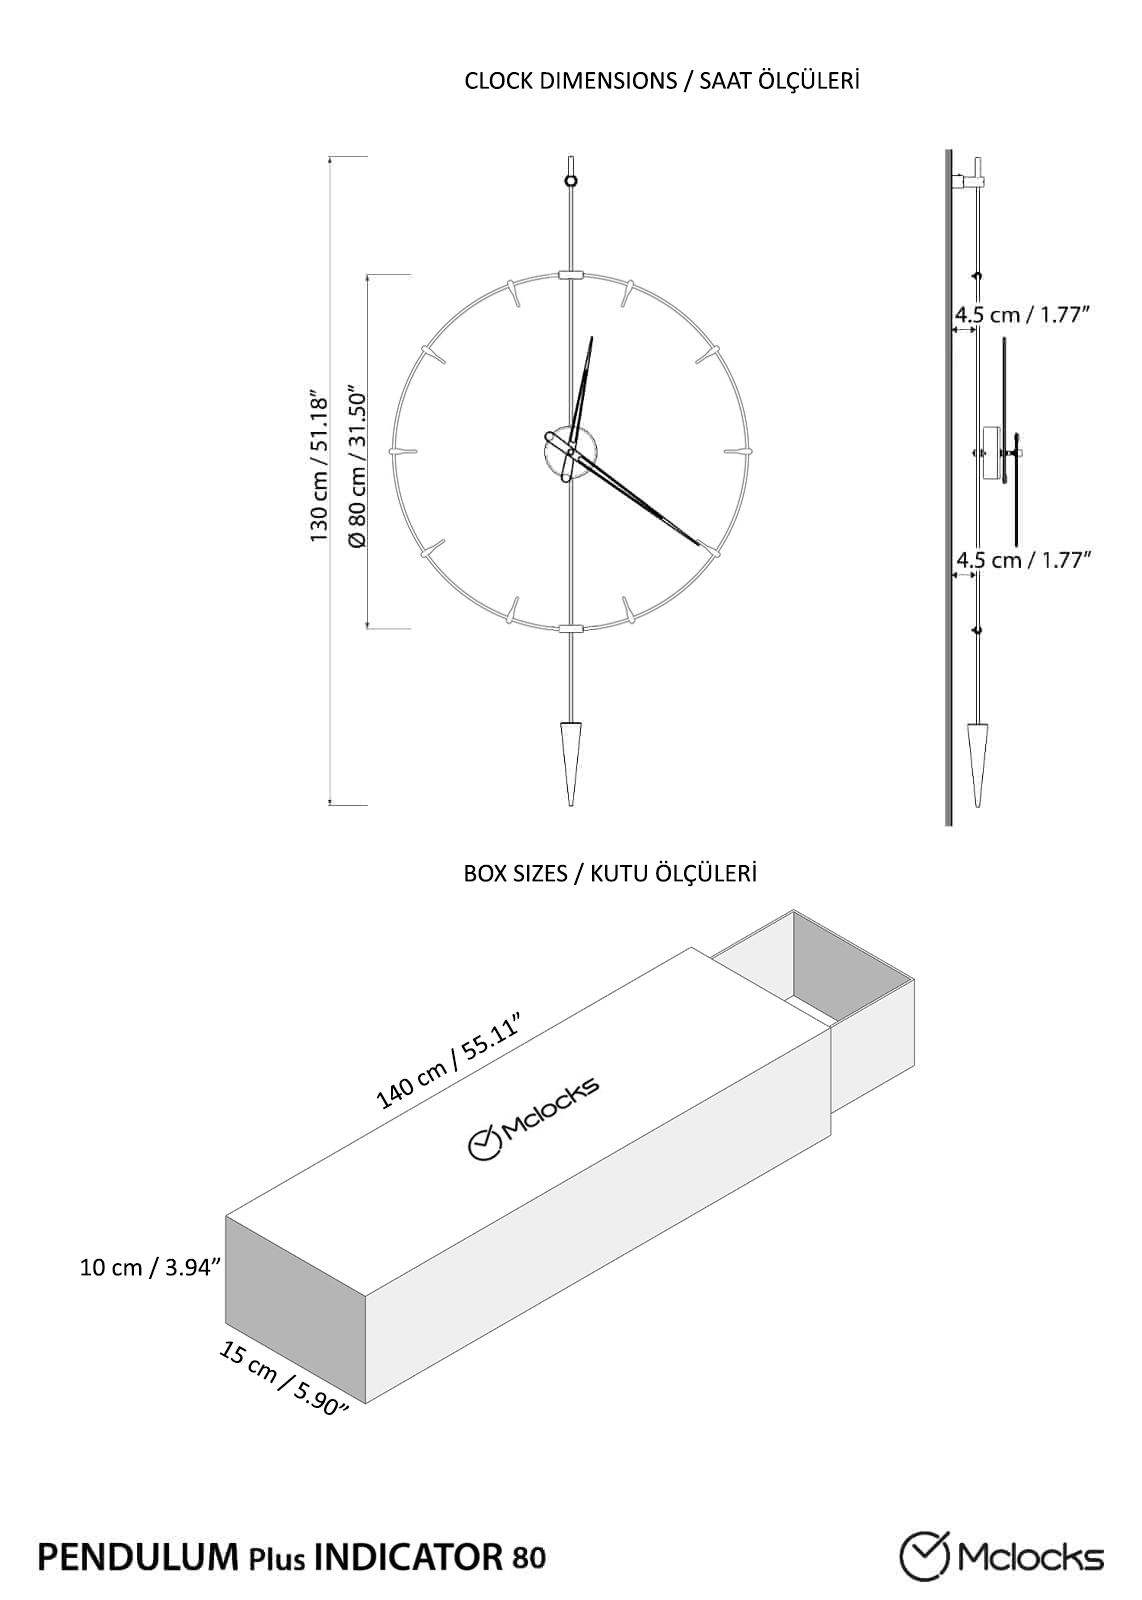 pendulum plus is one of the modern wall cloks design